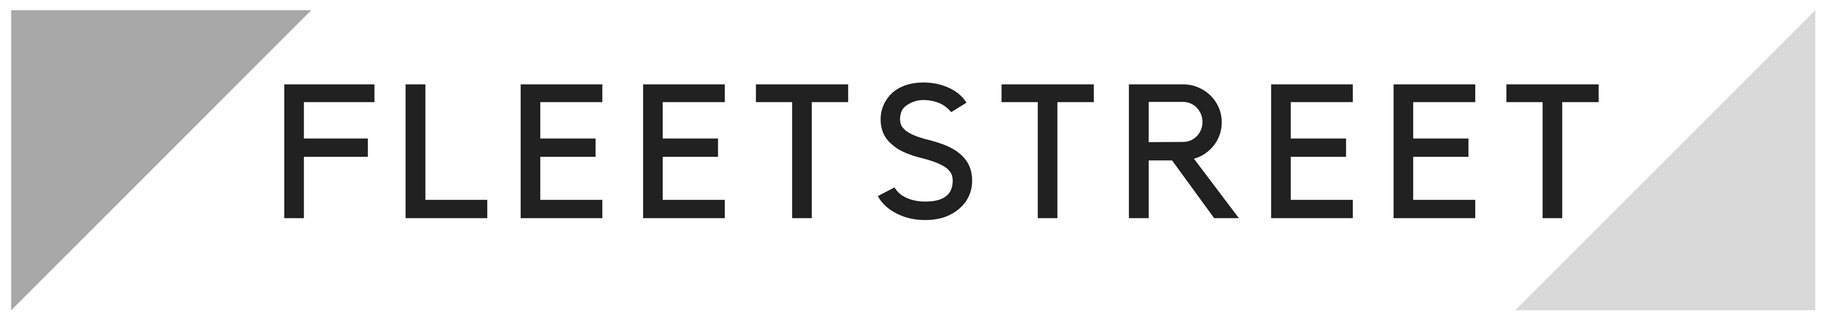 Fleetstreet Logo